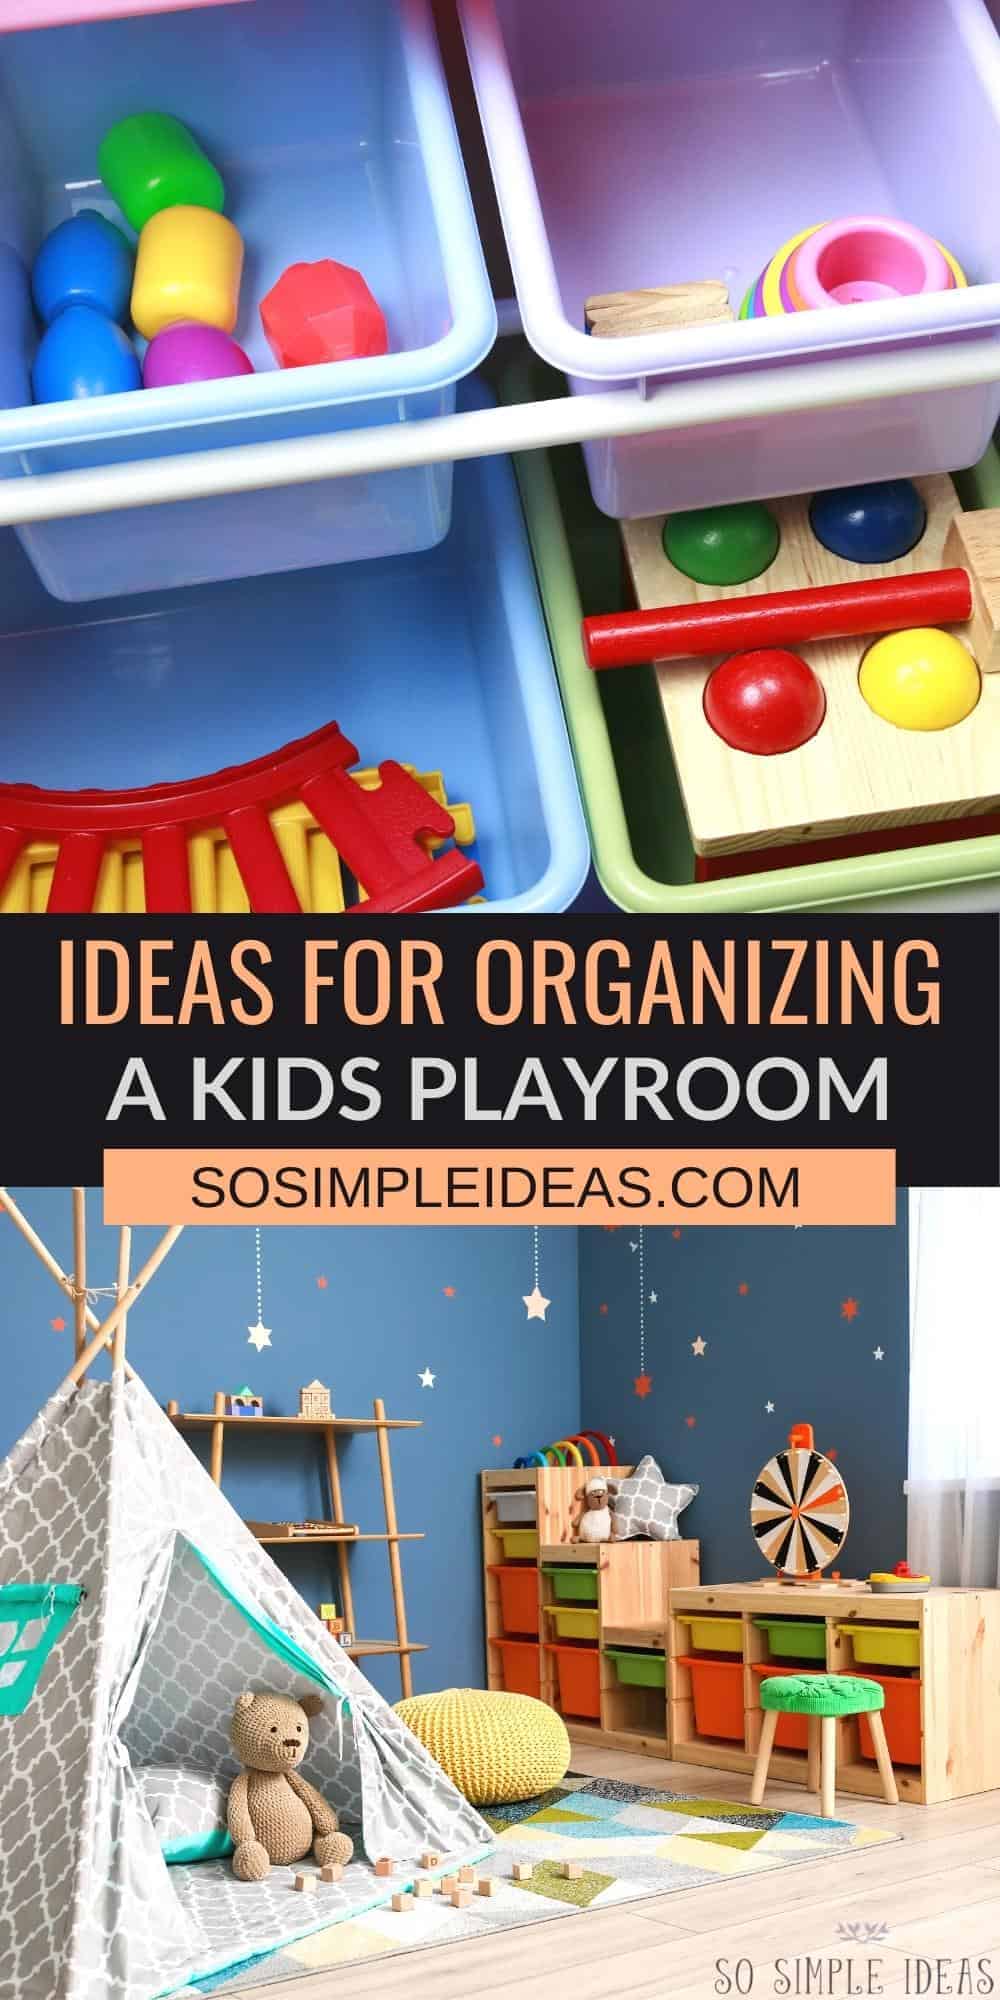 ideas for playroom organization pinterest image.